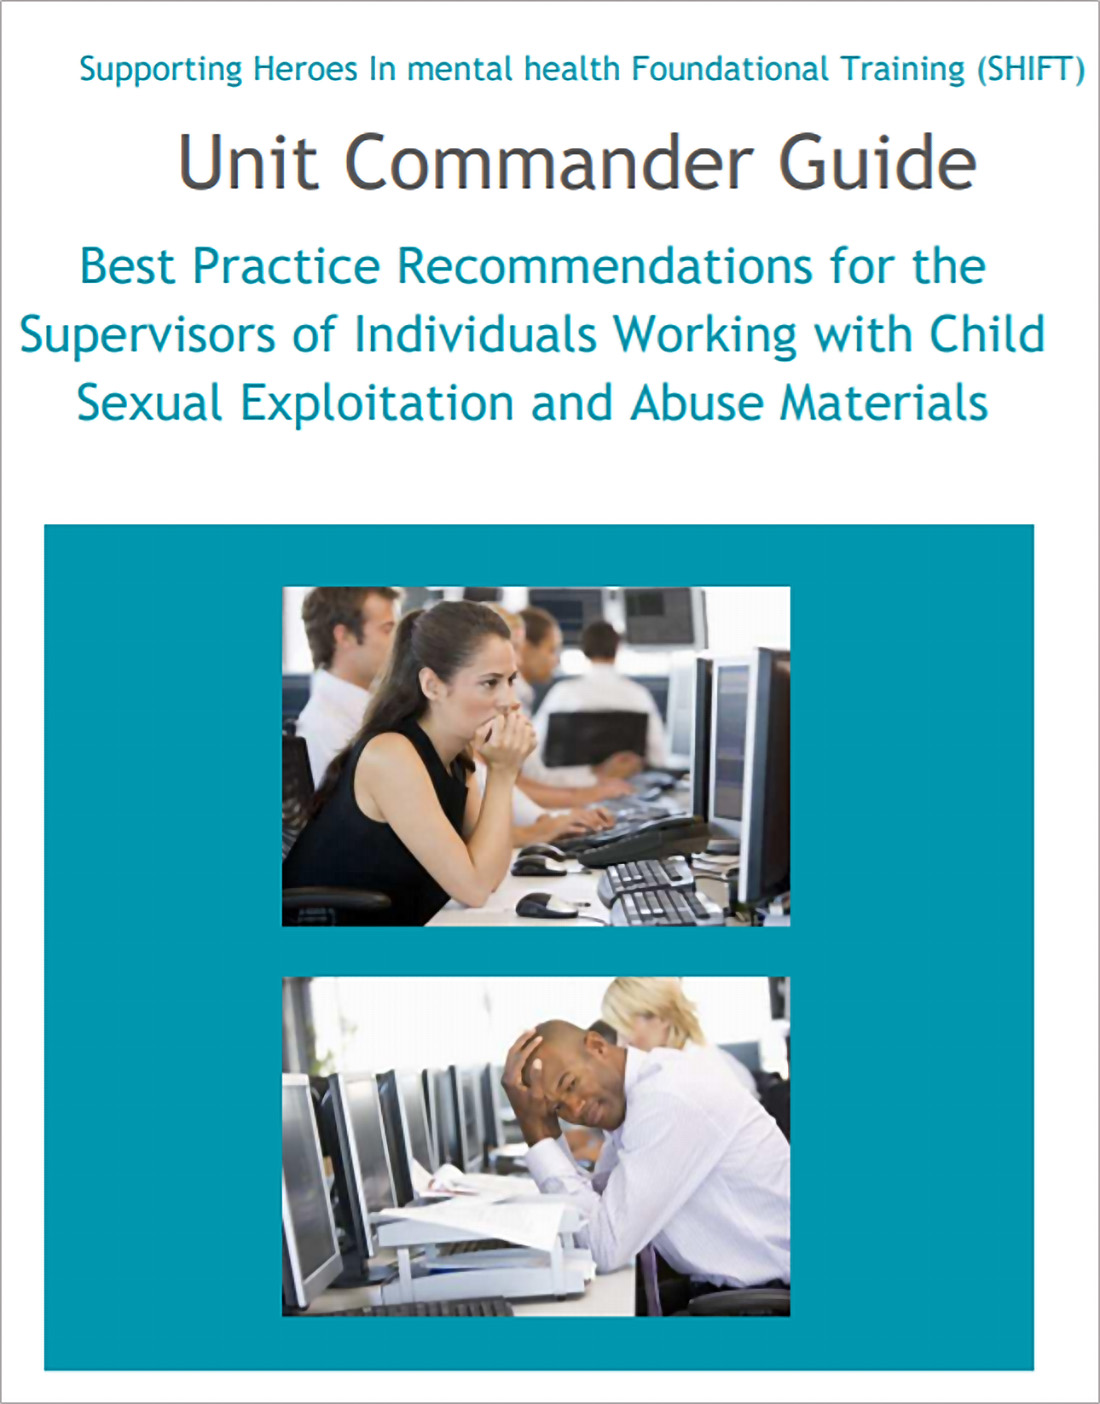 Thumbnail of the Shift Unit Commander Guide